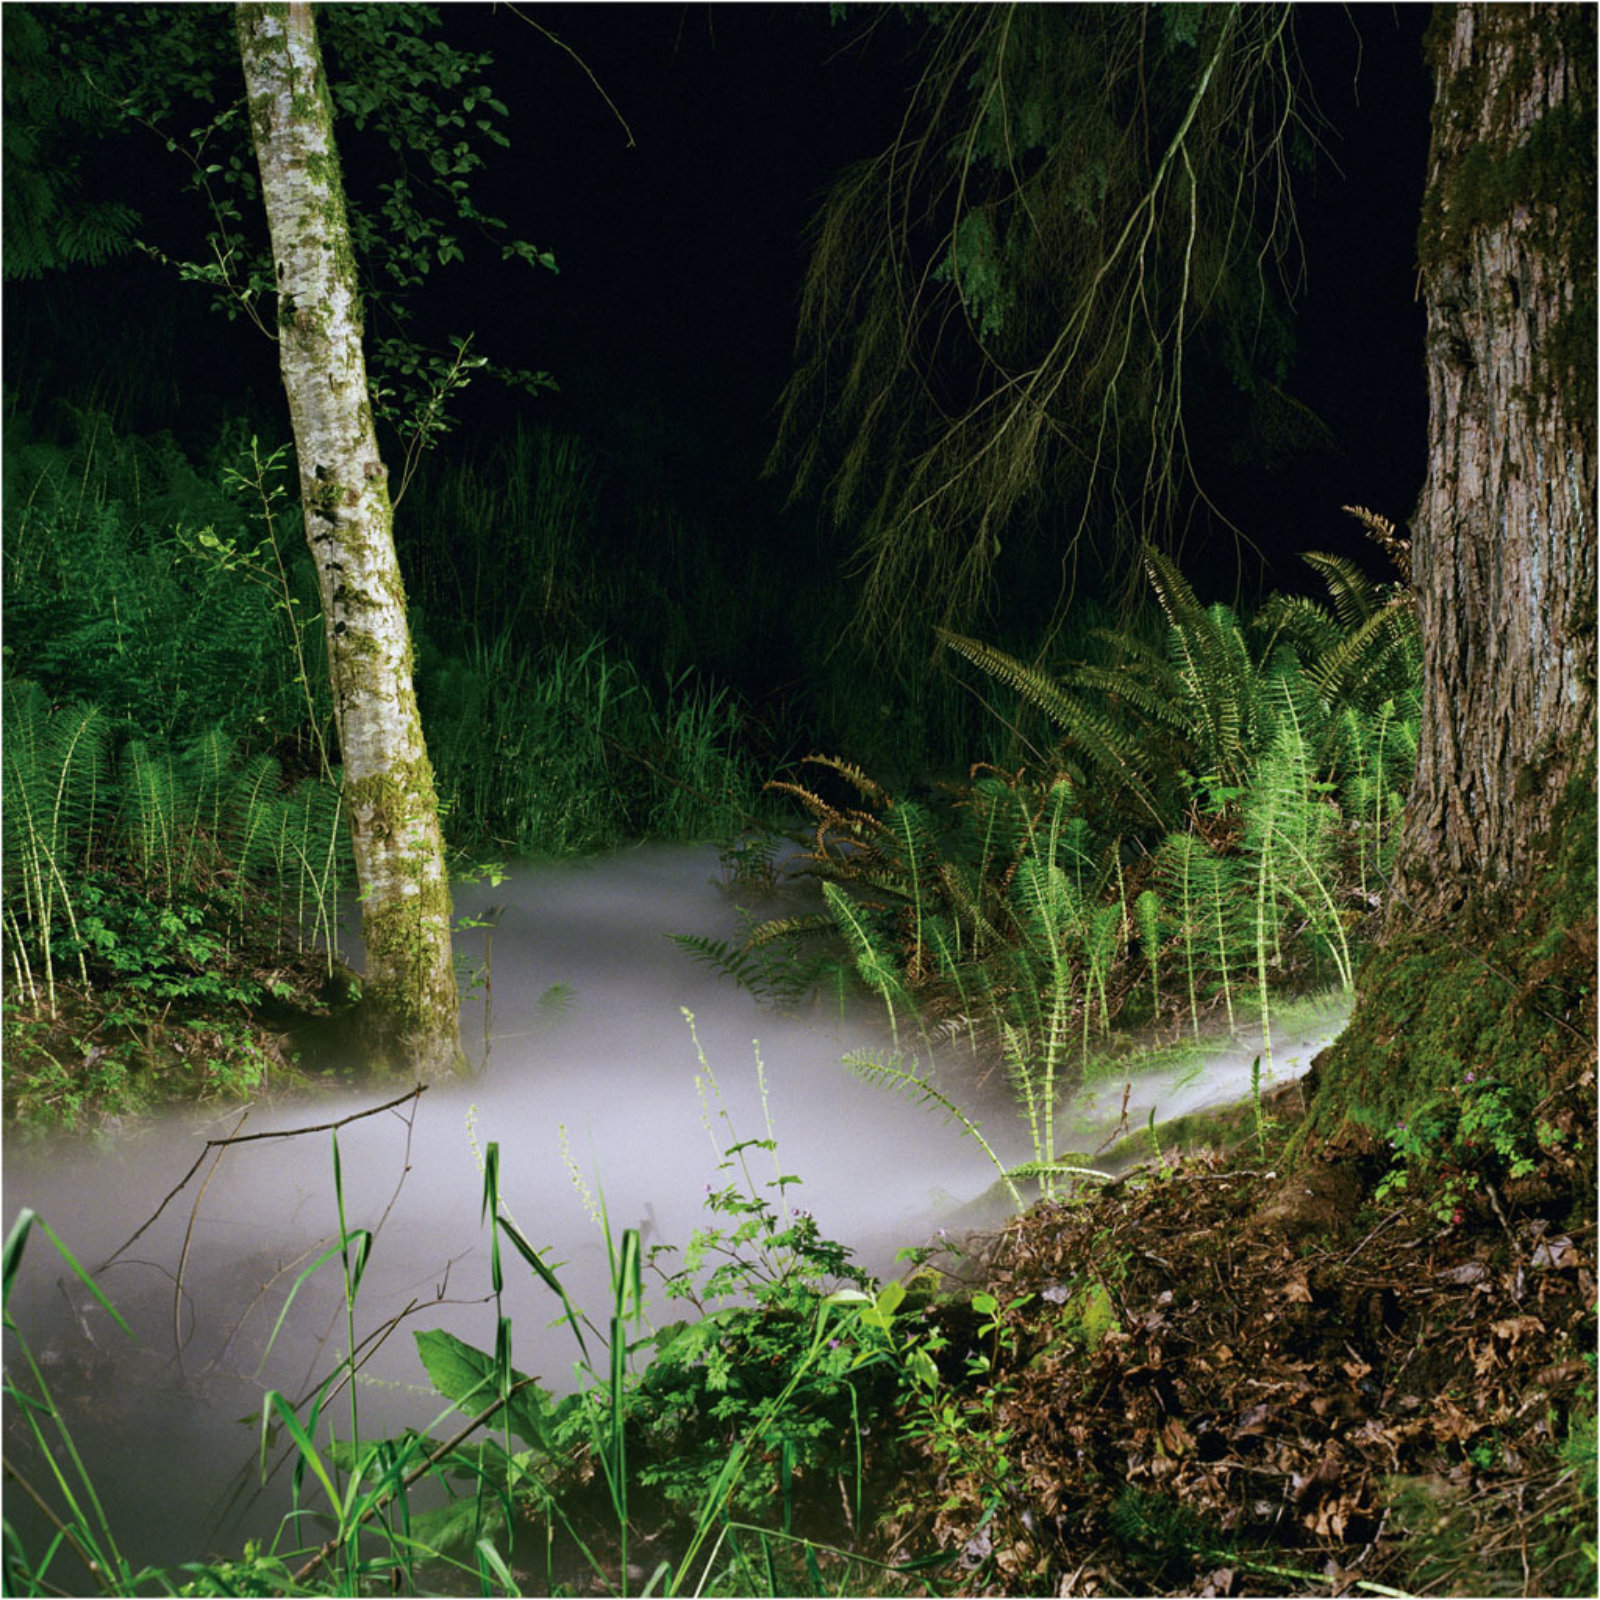 Kevin Schmidt, Fog Study 1, 2004, lightjet photo, 24 x 24 in. (61 x 61 cm)